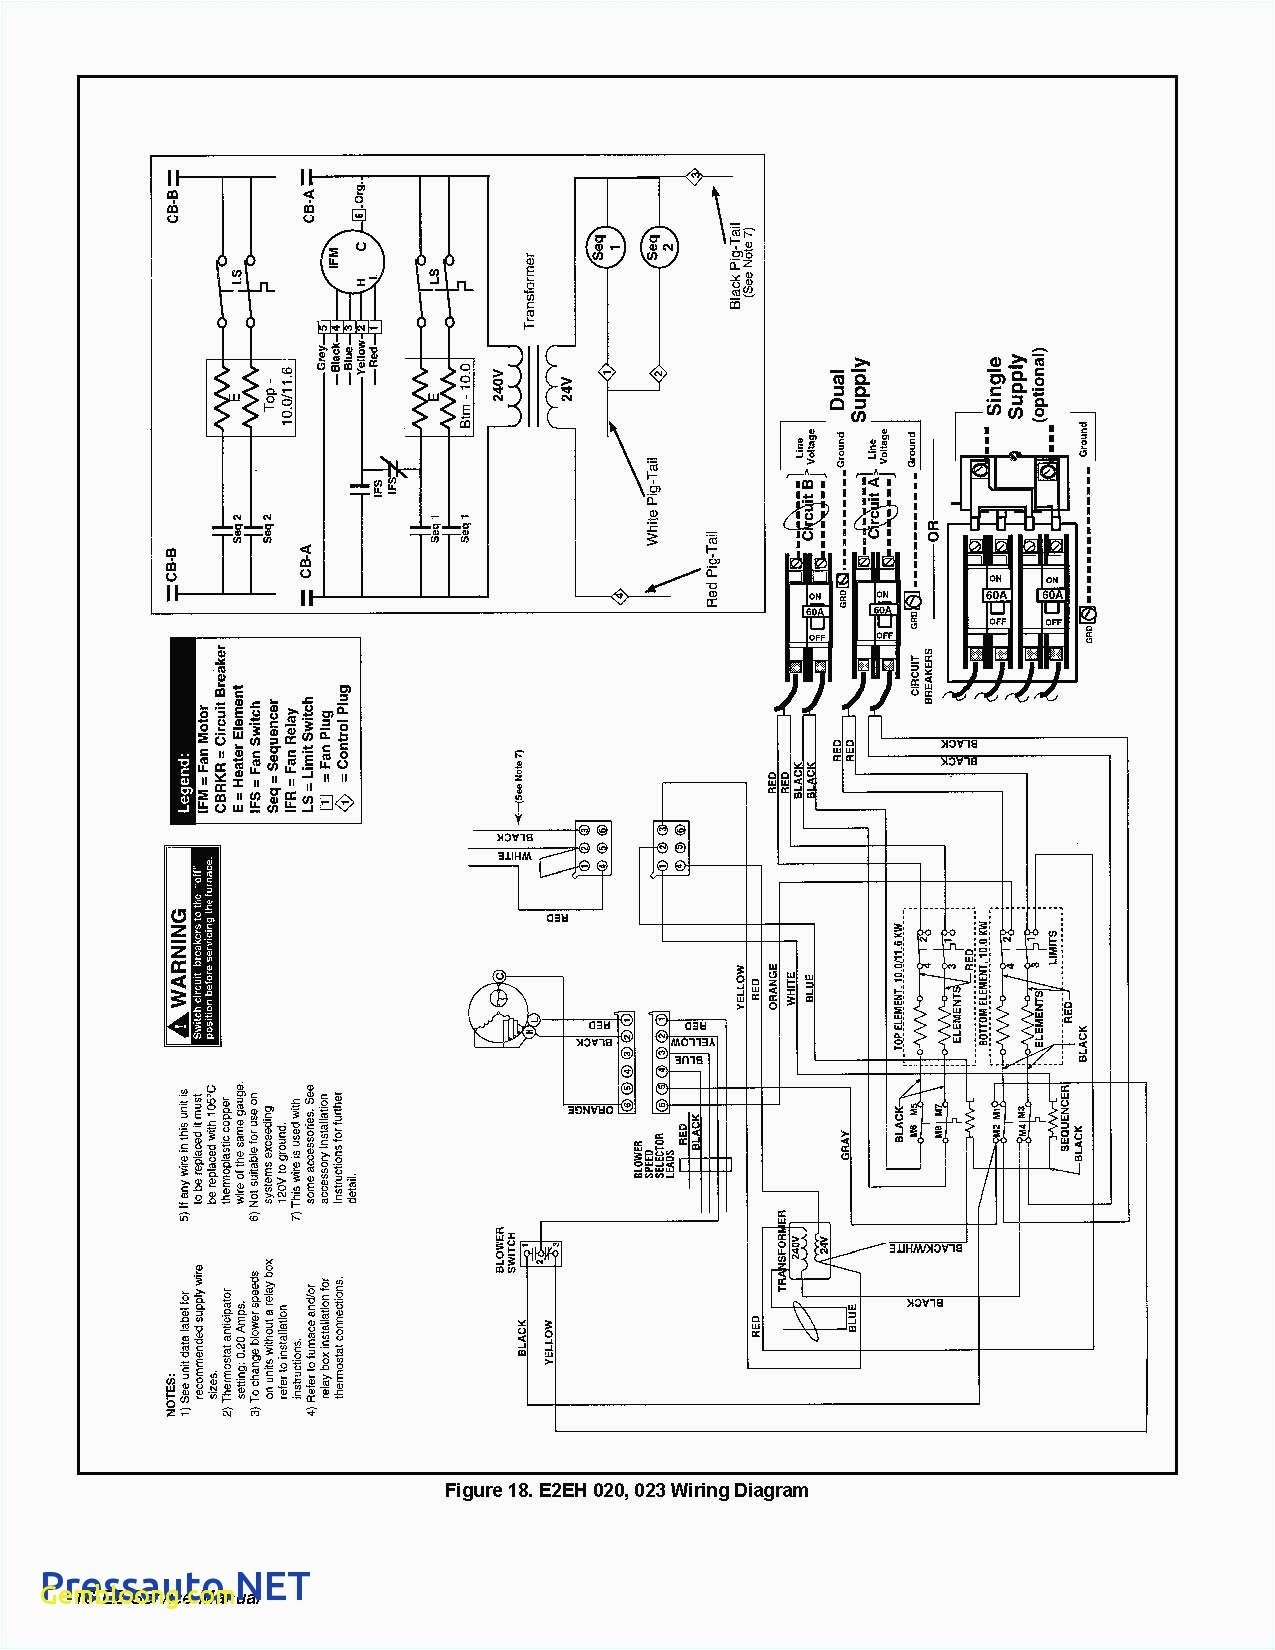 nordyne wiring schematics wiring diagram blog e2eb 012ha wiring diagram